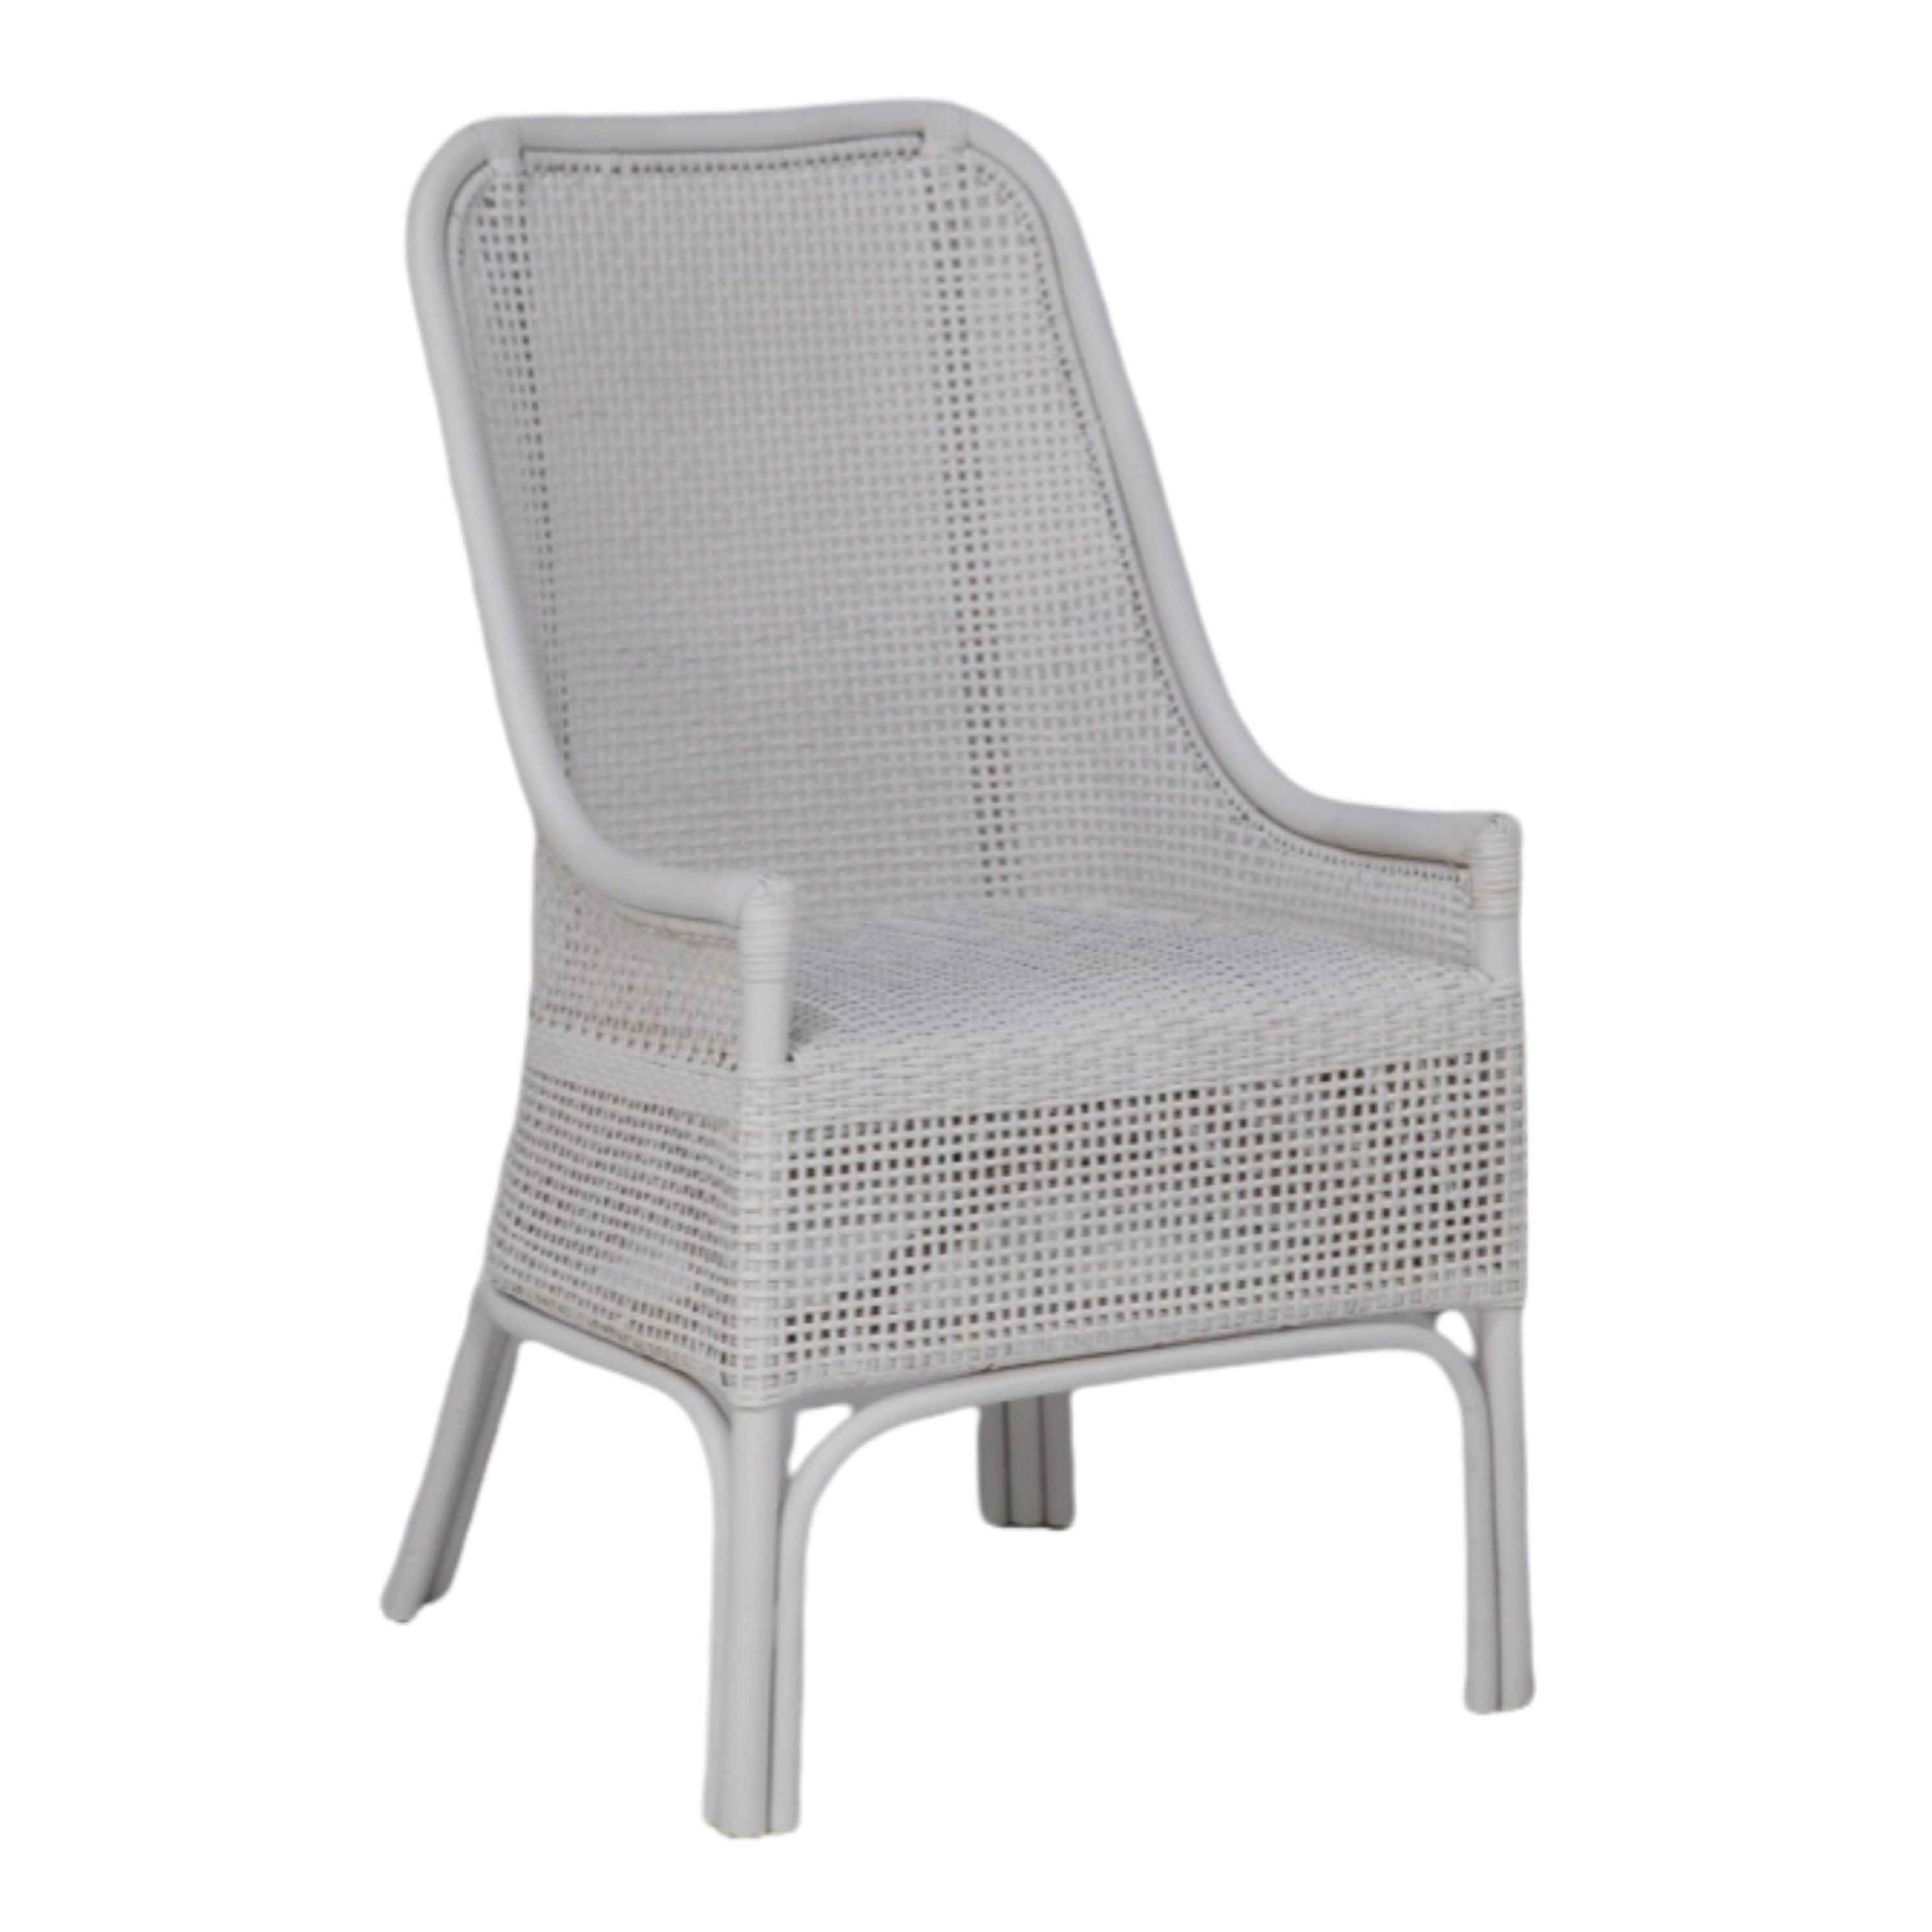 Malibu Chair White